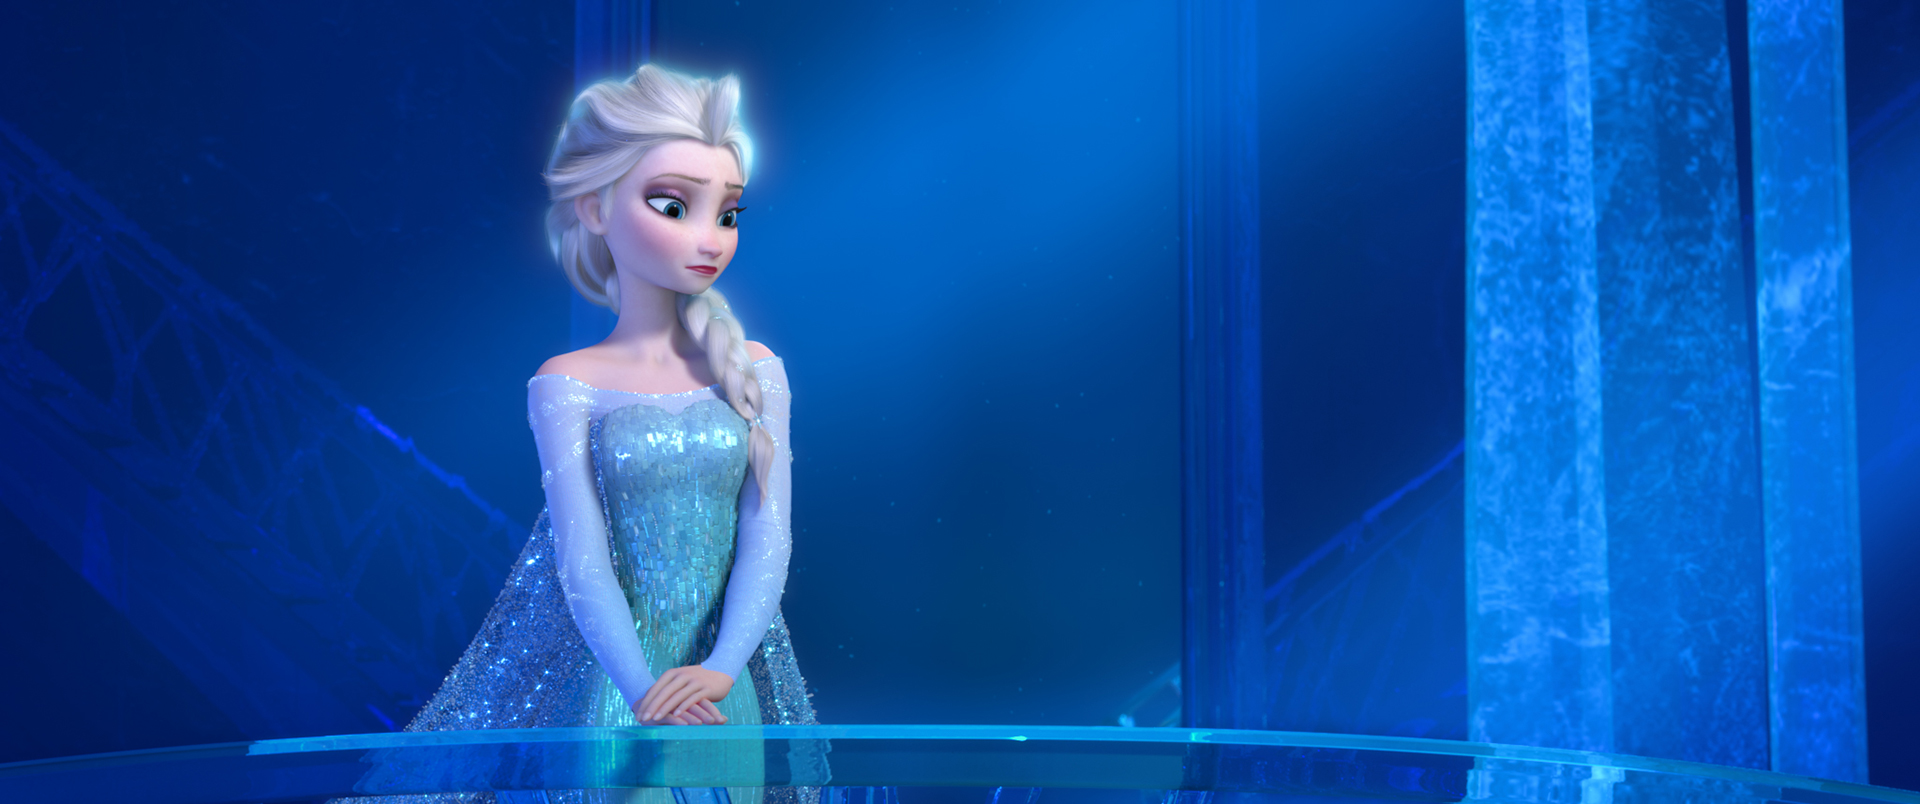 Celebrating 10 Years of Disney Animation's 'Frozen' - The Walt